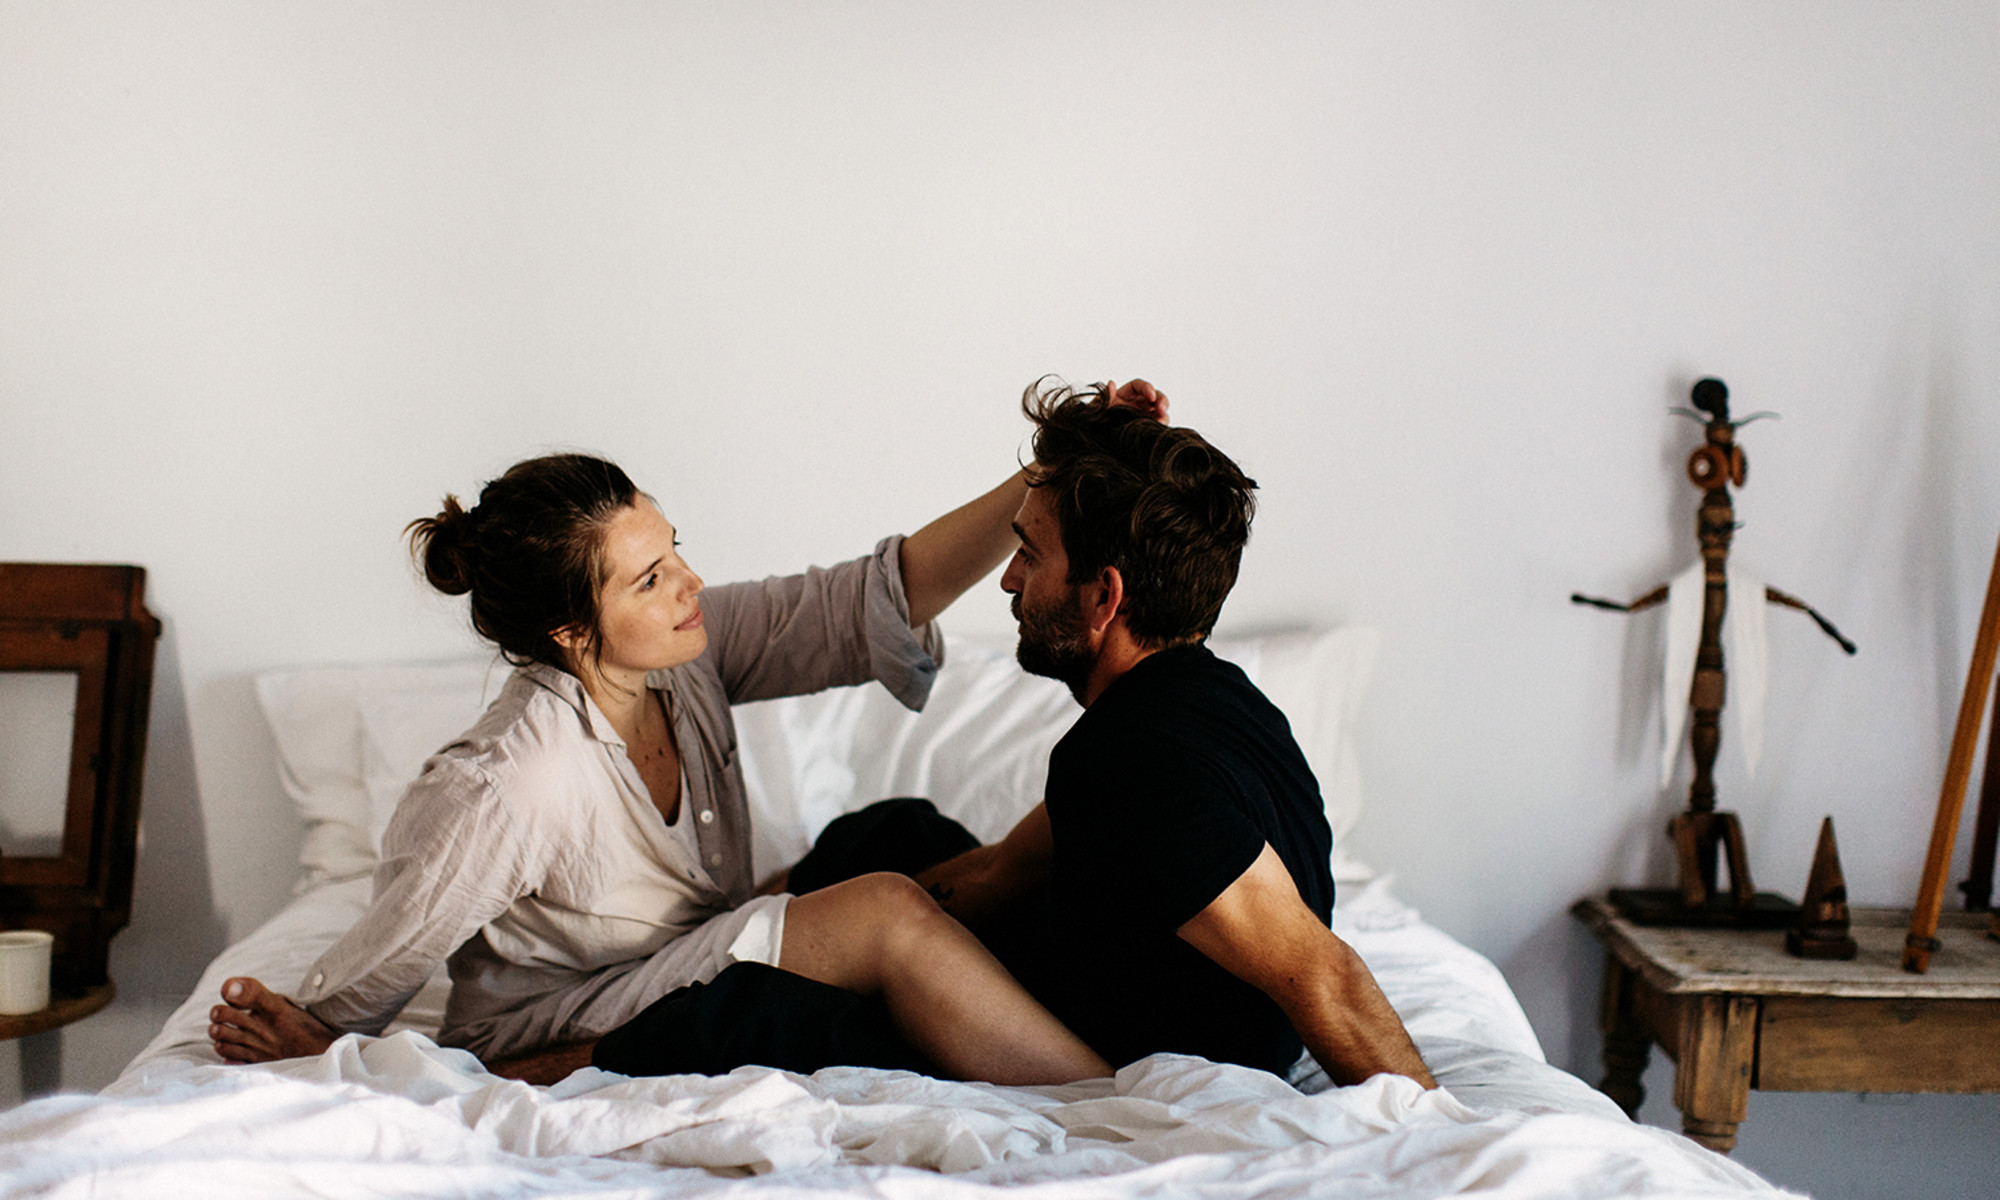 Is It OK To Masturbate When Your Partner Is Home? mindbodygreen photo